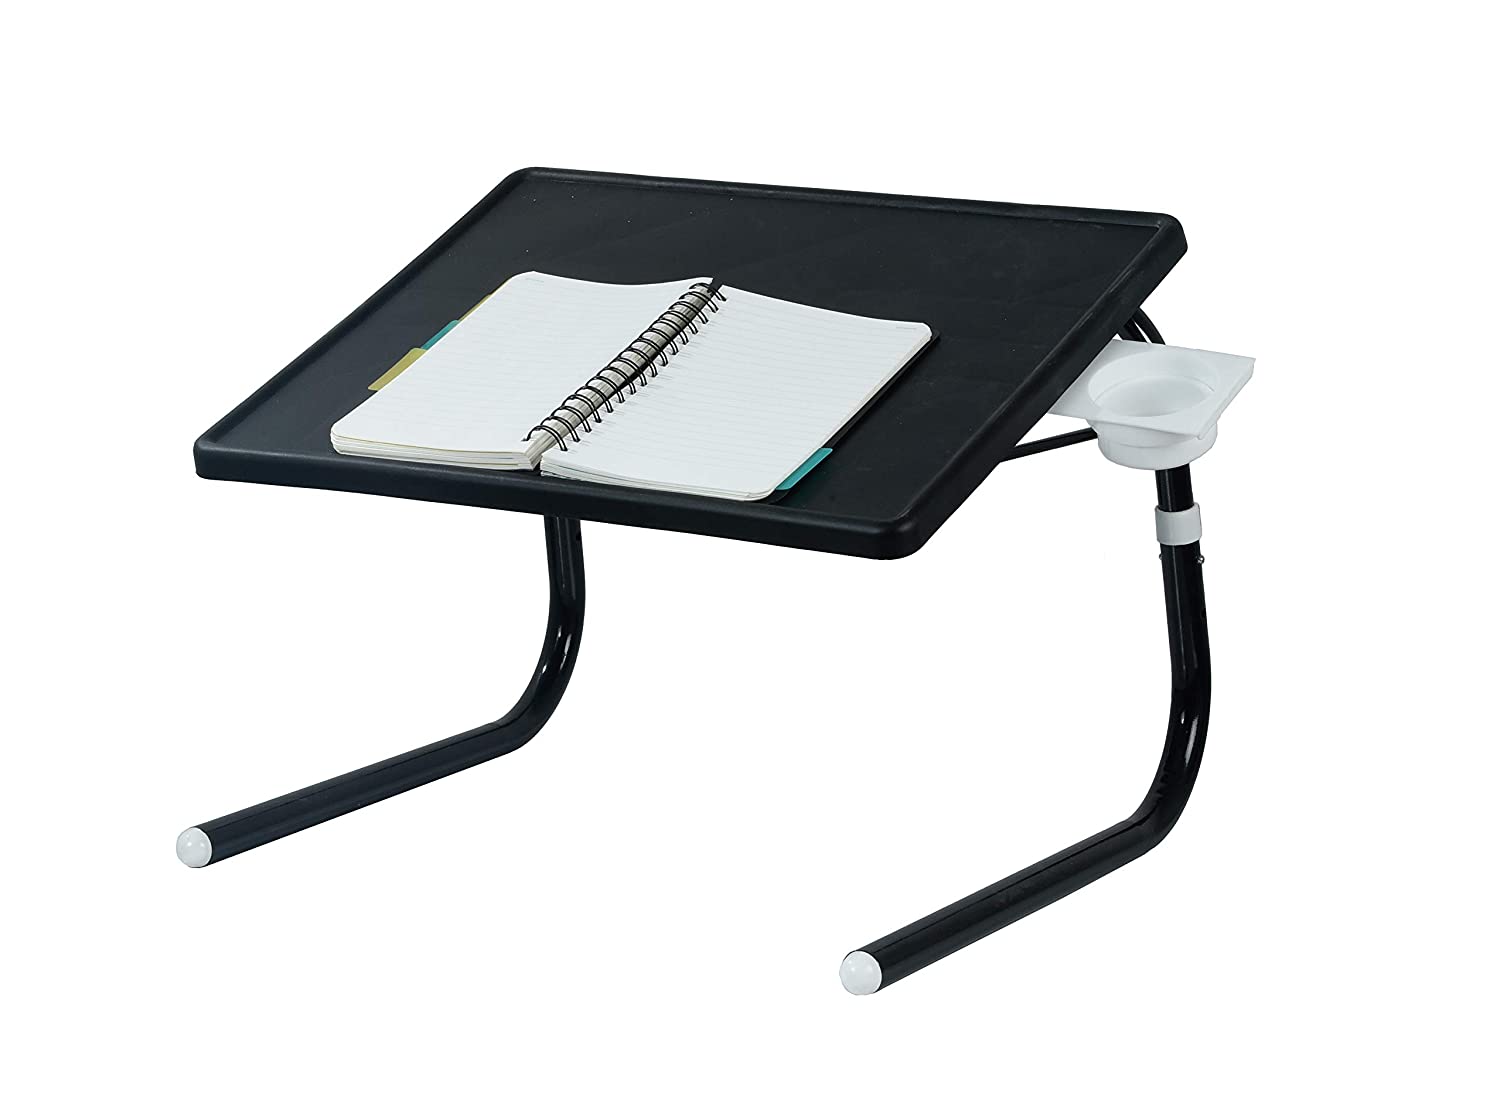 Mini foldable Study table - Black with Black legs